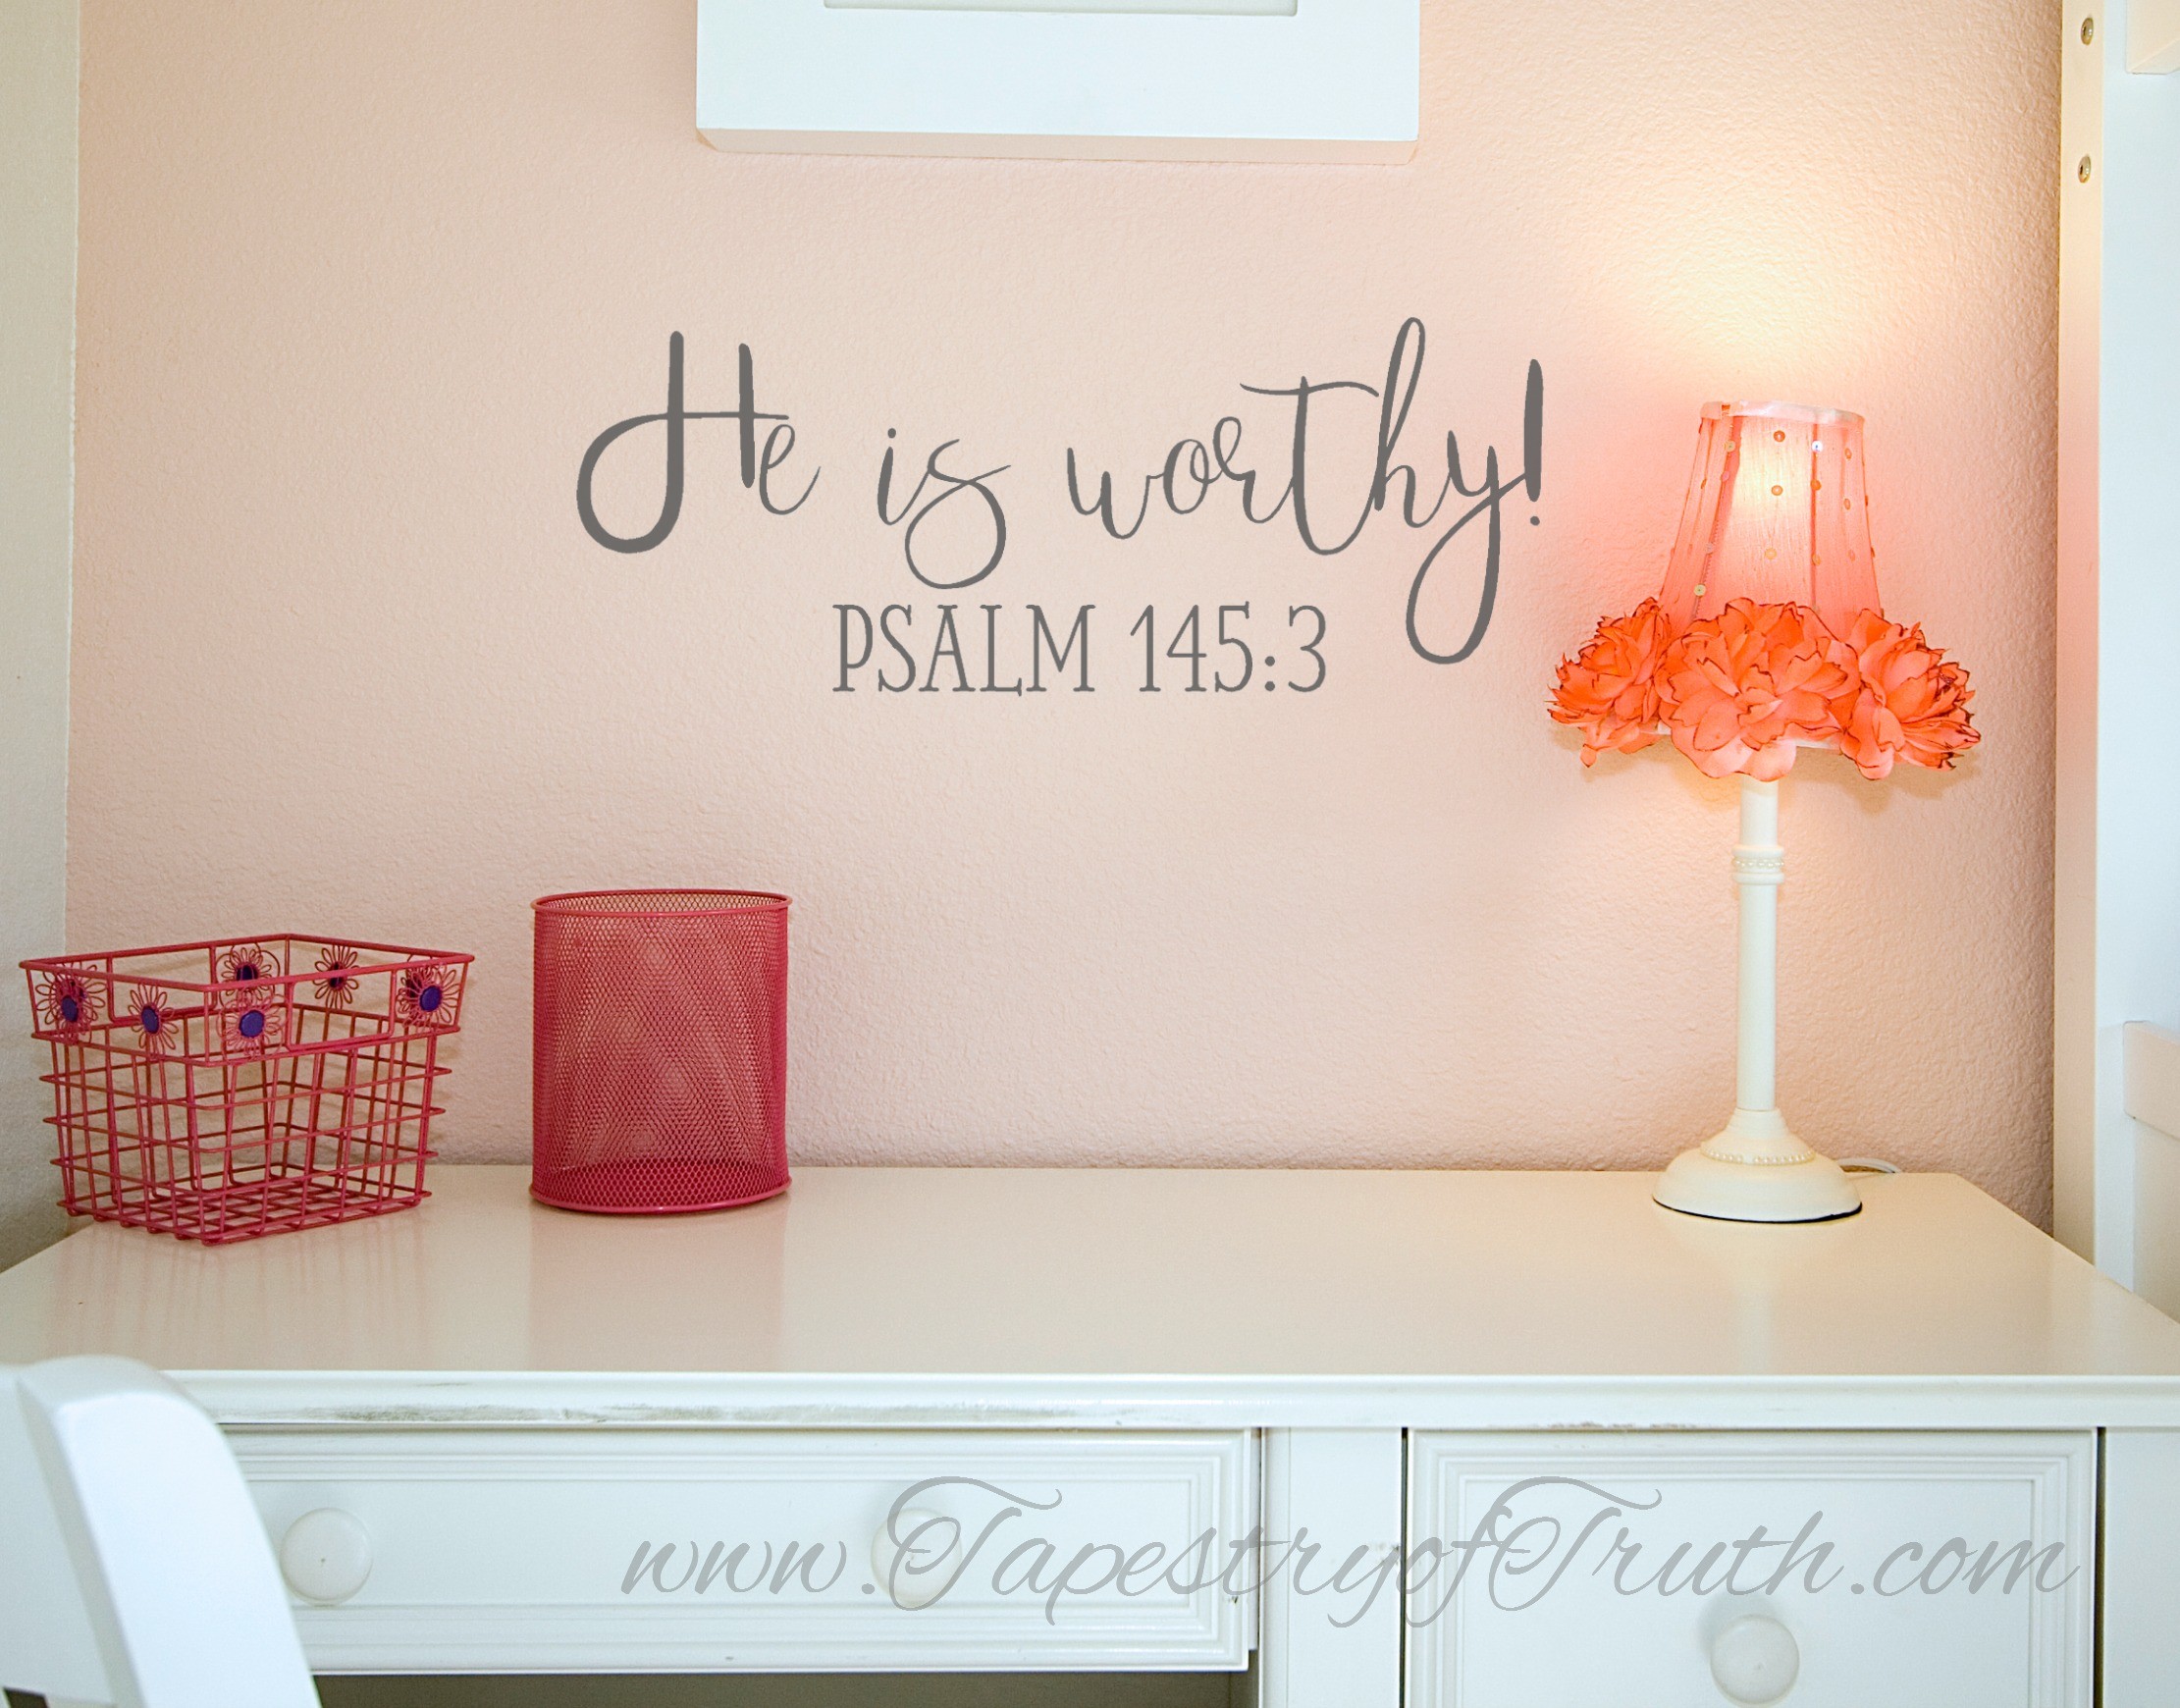 He is worthy. Psalm 145:3